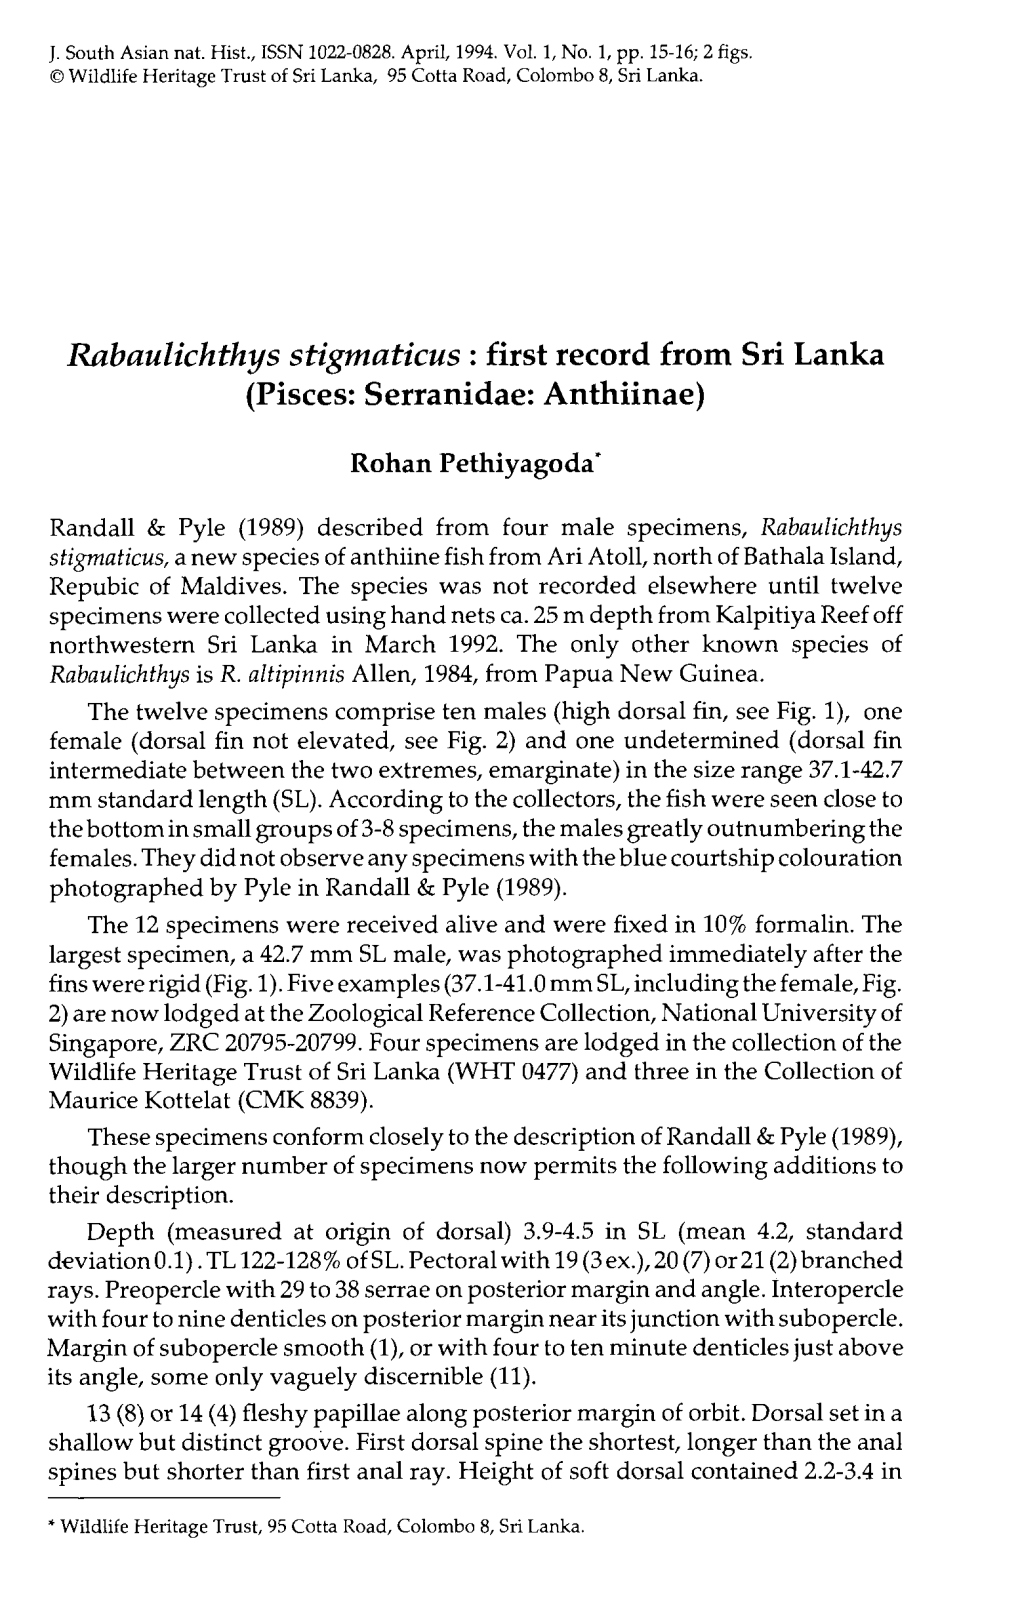 Rabaulichthys Stigmaticus : First Record from Sri Lanka (Pisces: Serranidae: Anthiinae)